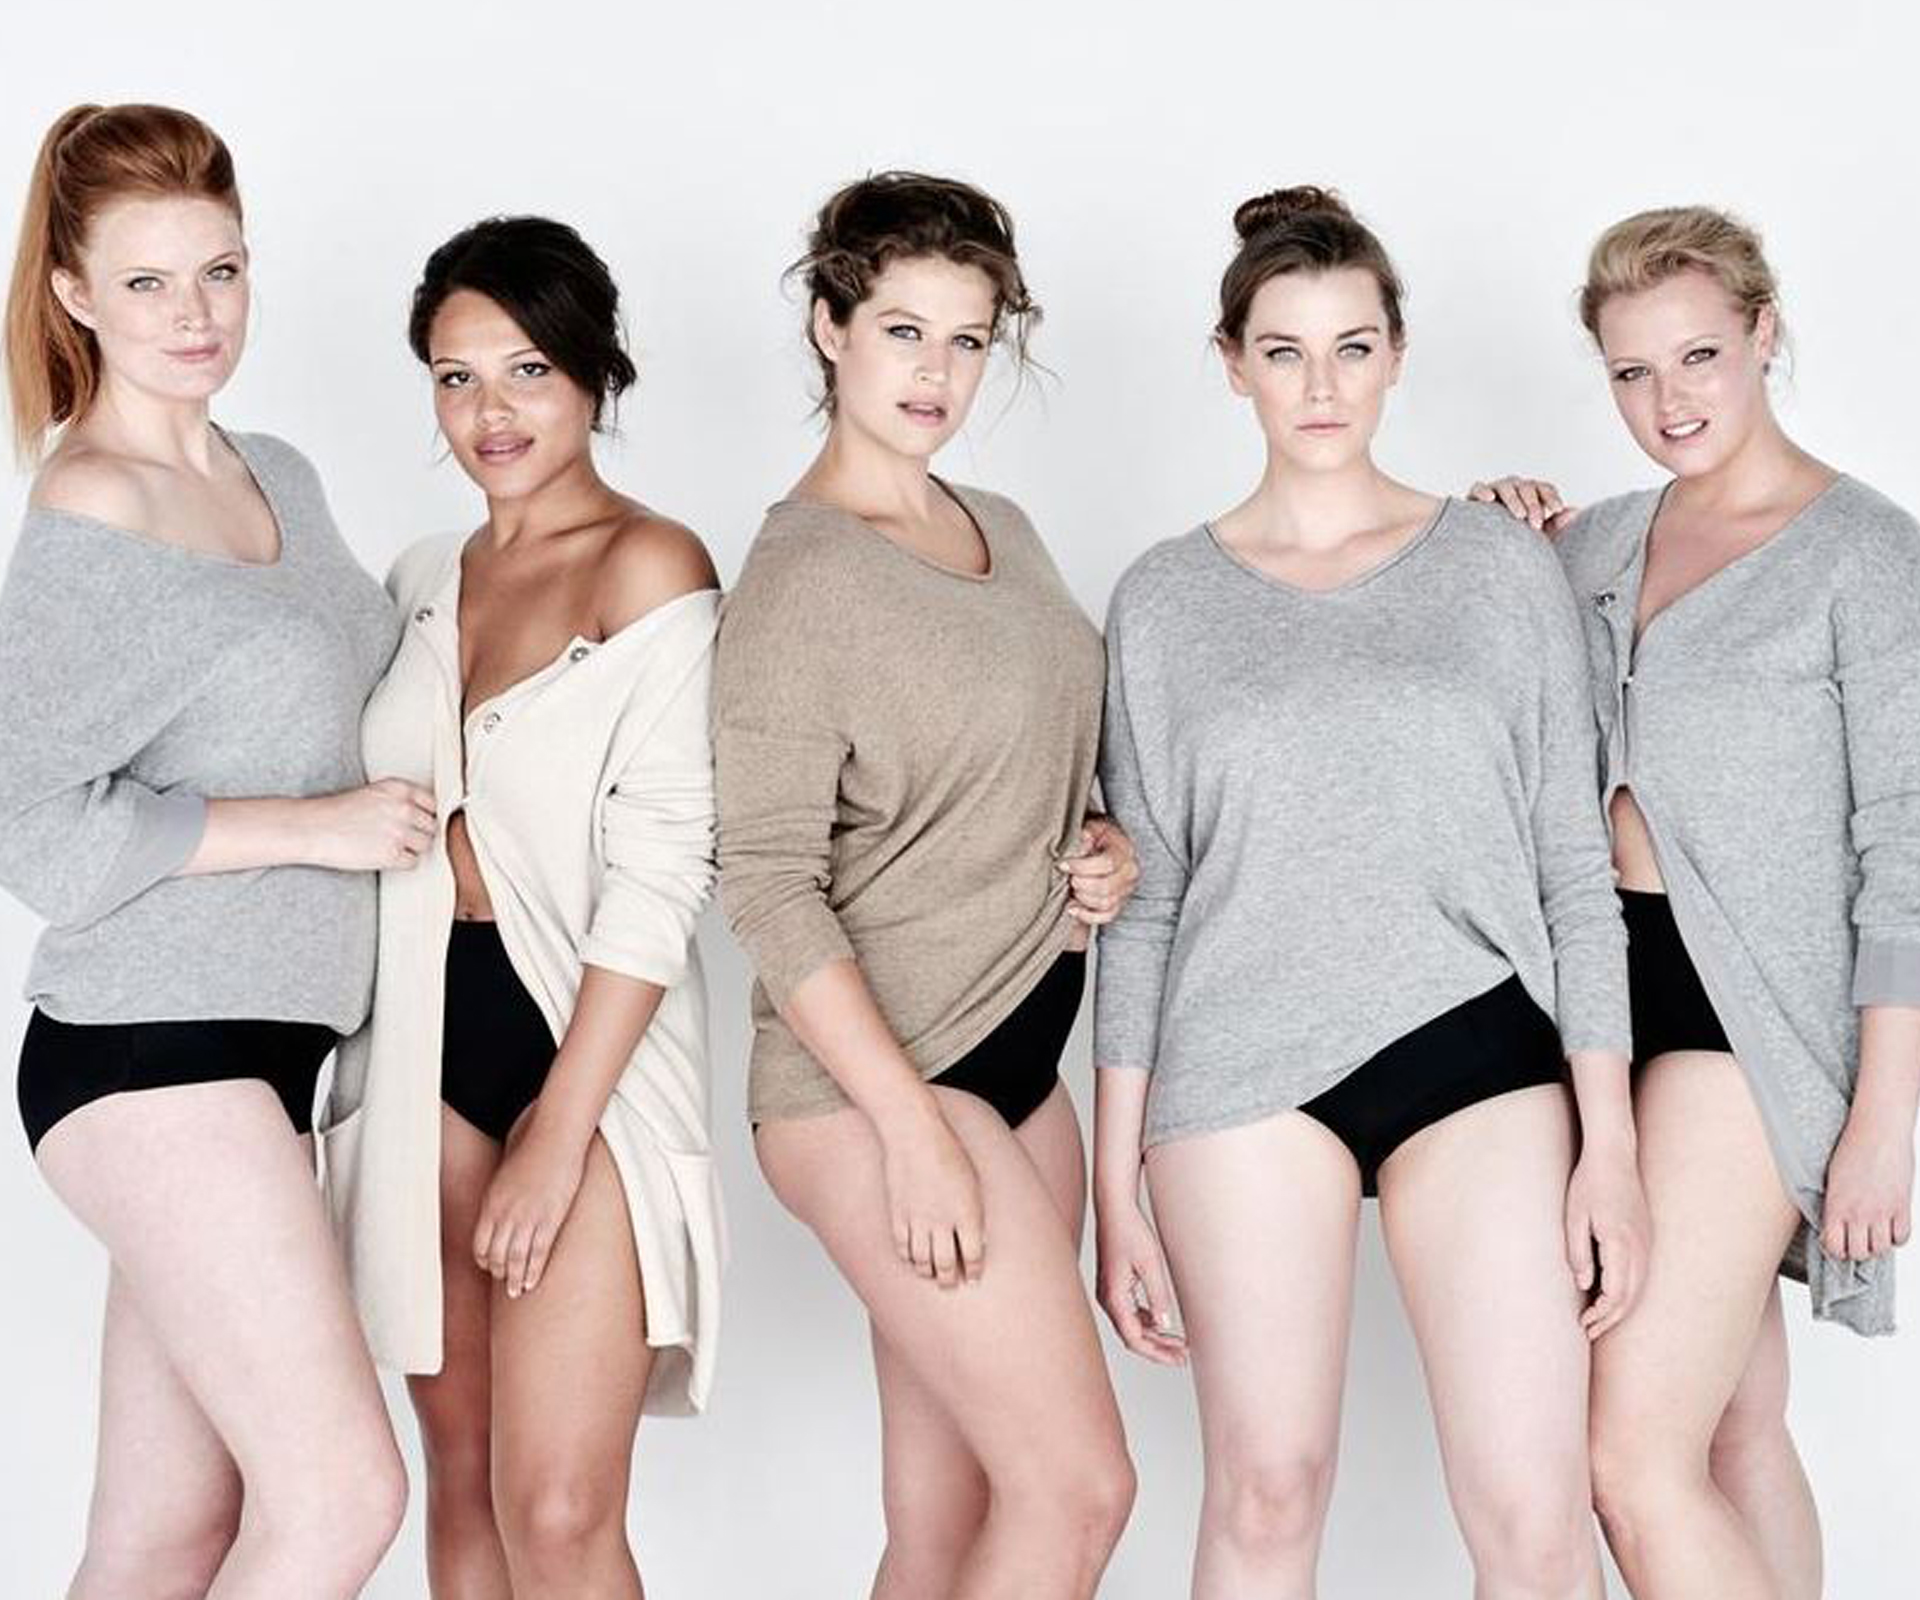 Models unite to fight body image battle